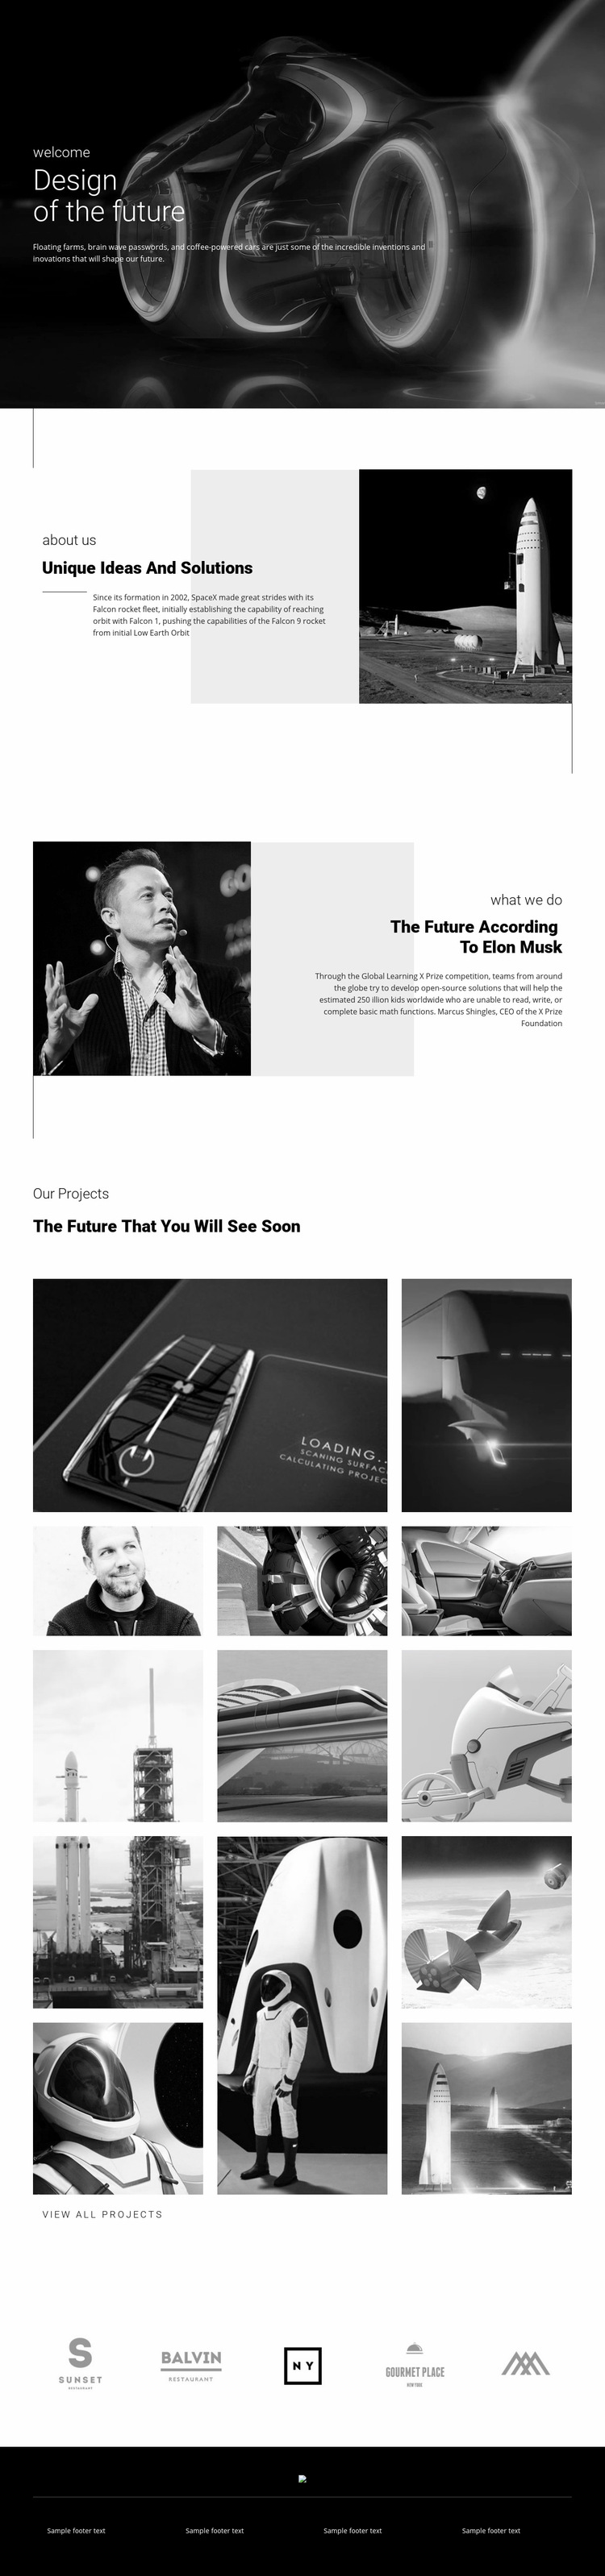 Design of future technology Web Page Design